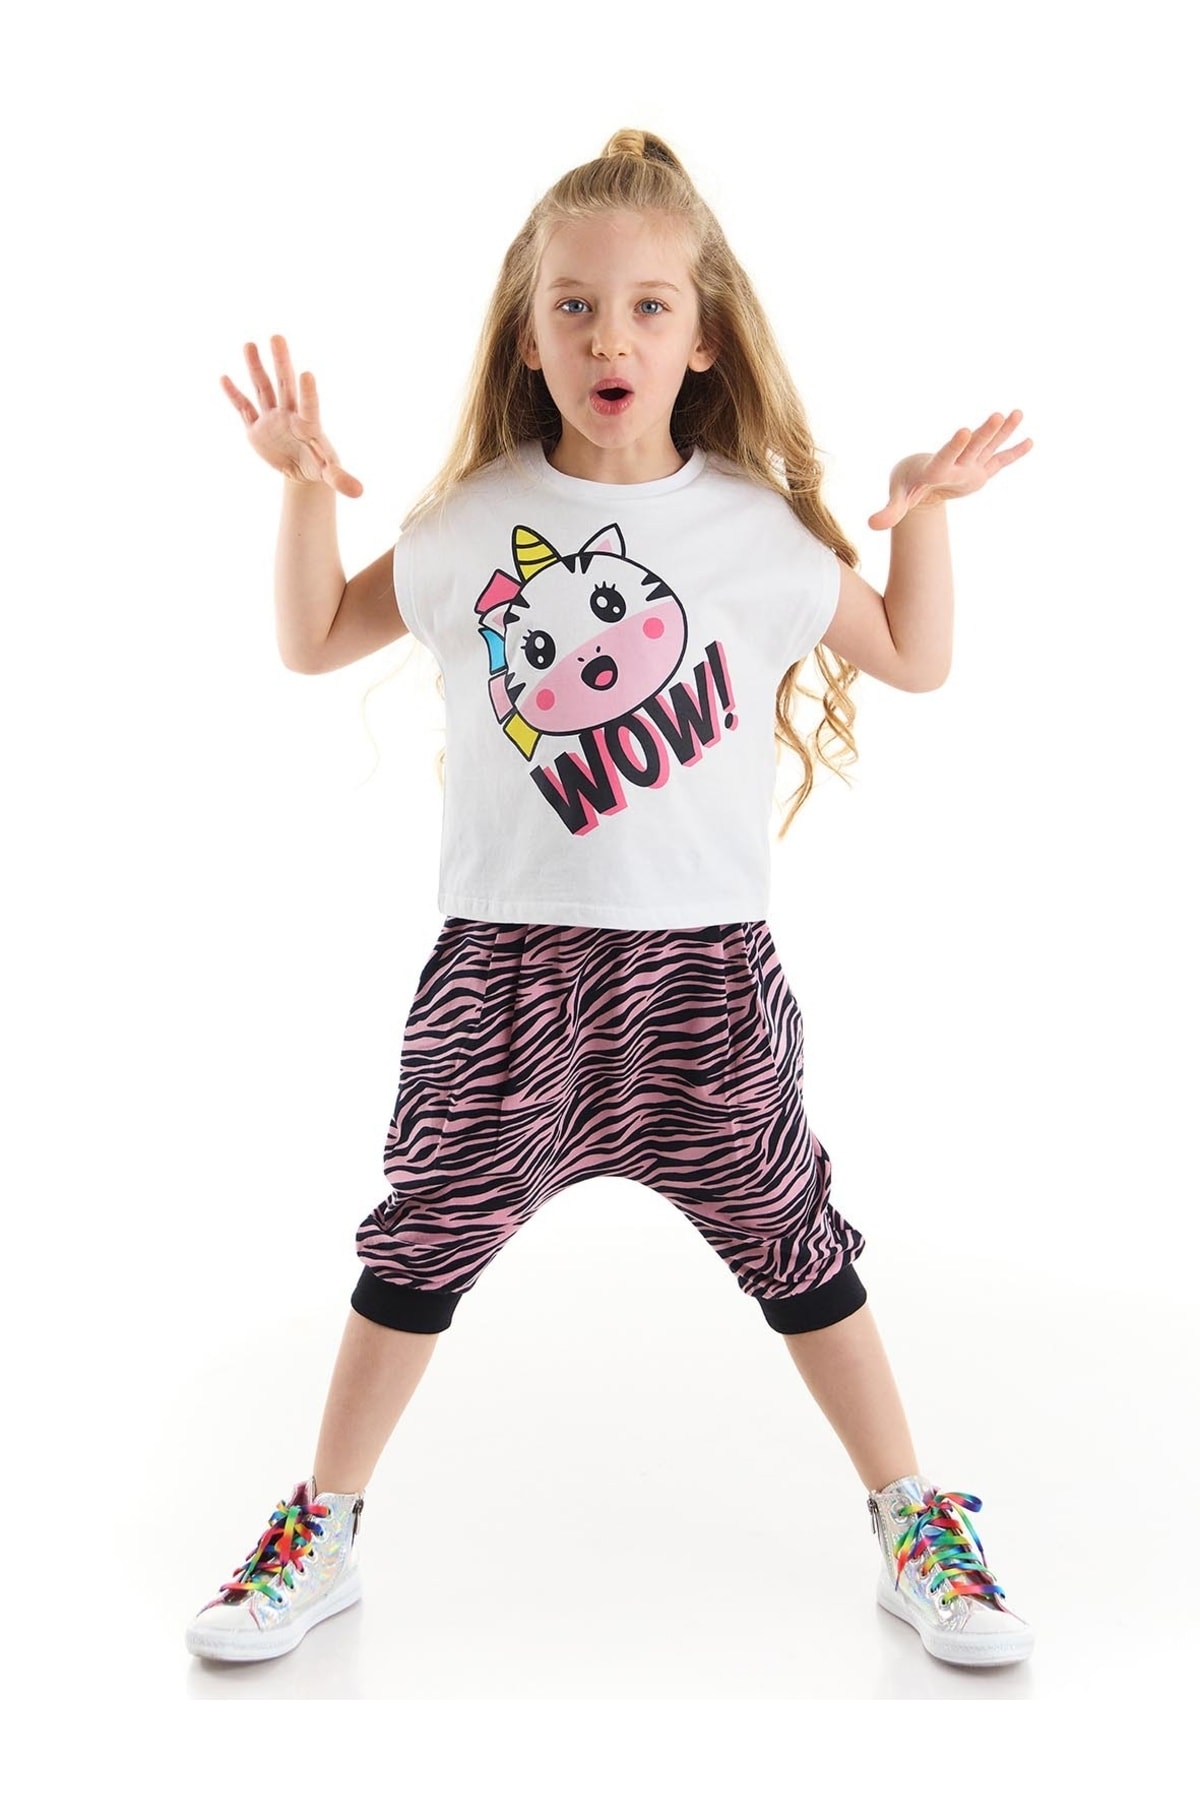 Denokids Zebracorn Girls T-shirt Capri Shorts Set